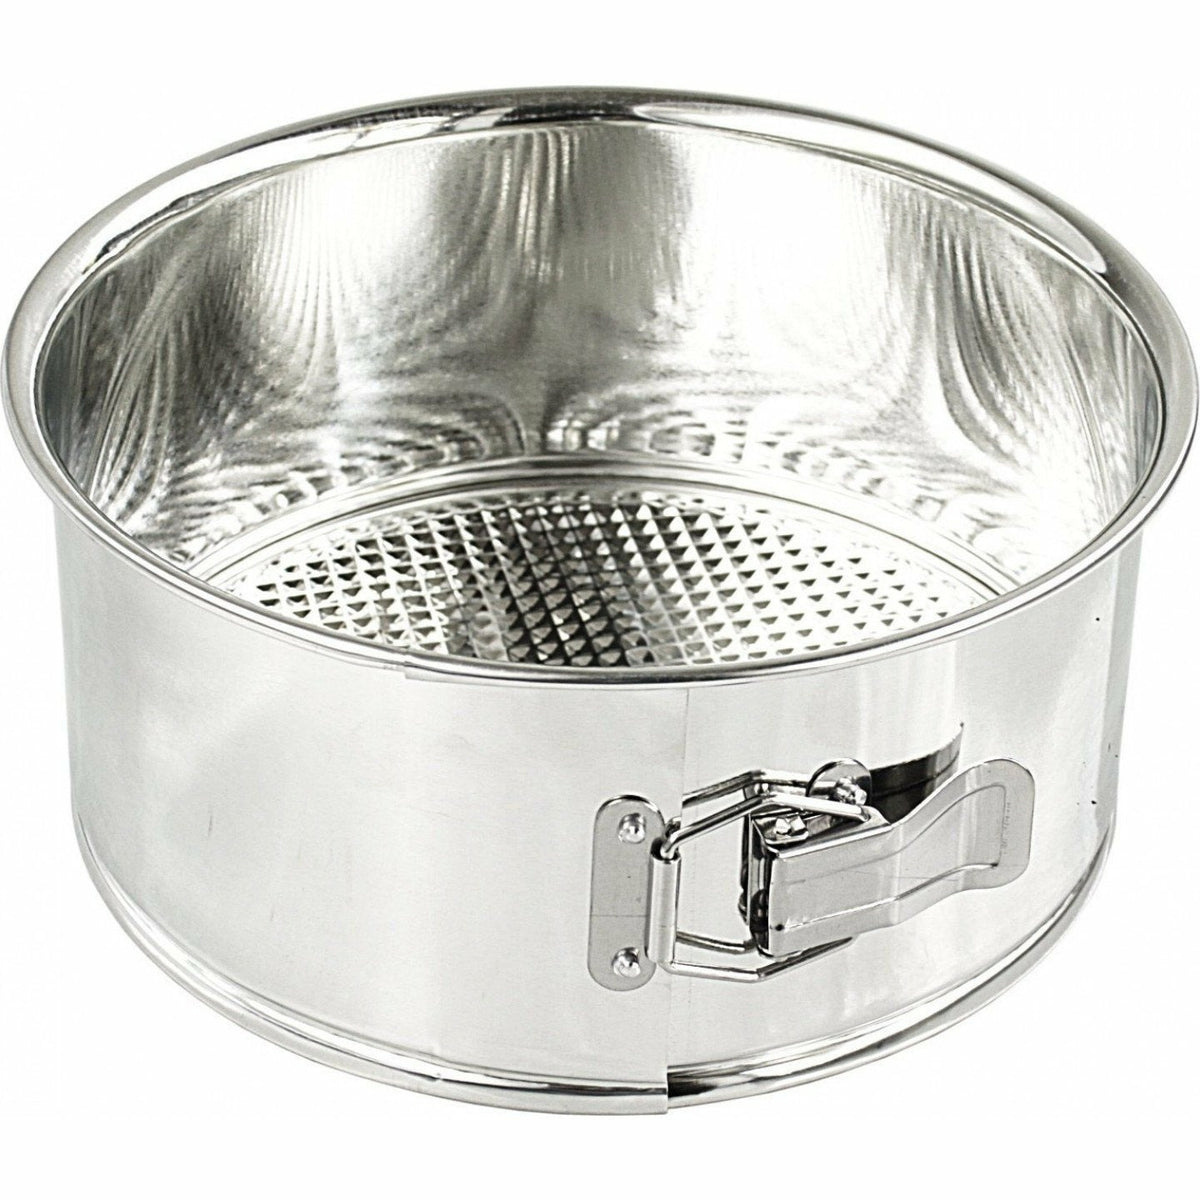  Zenker Tin Plated Steel Springform Pan, 9-Inch: Home & Kitchen